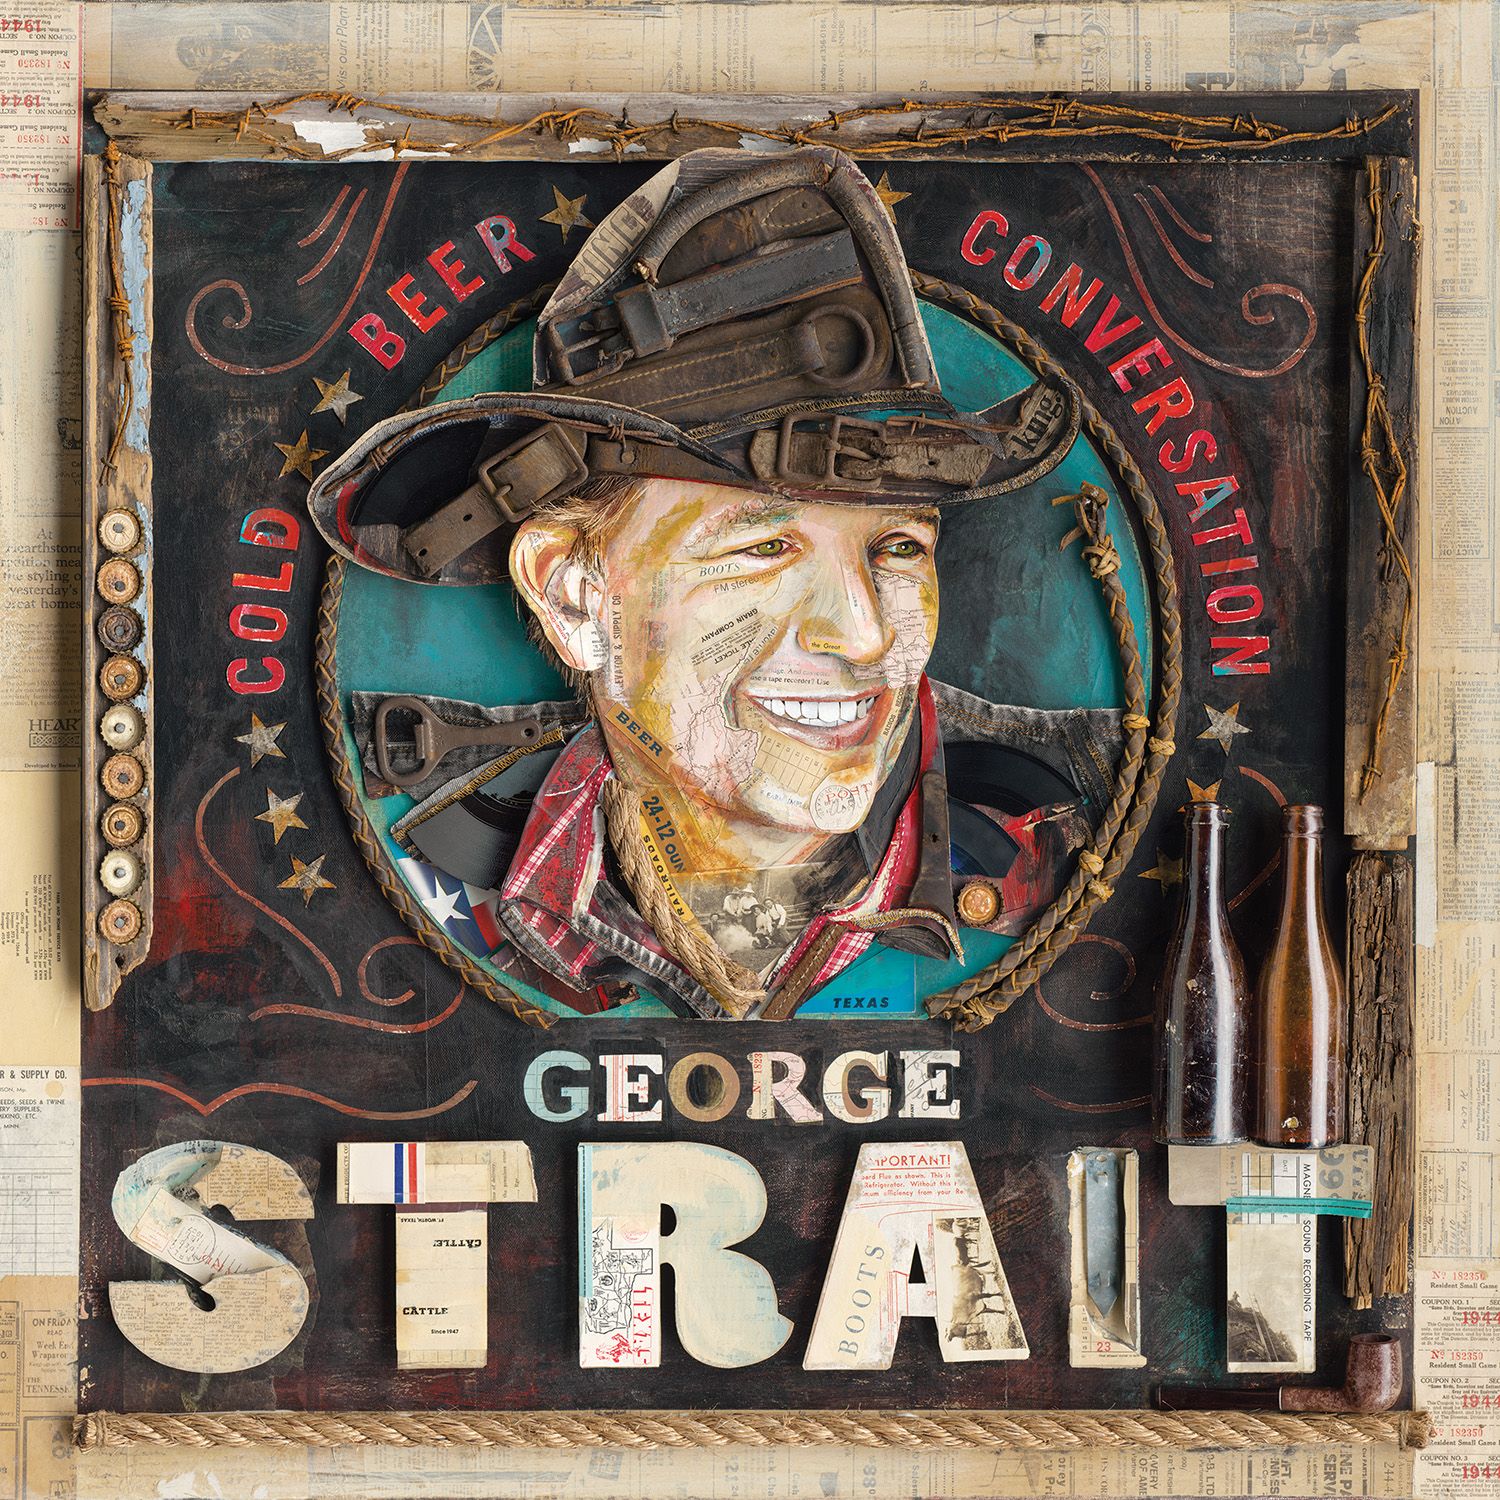 GEORGE STRAIT TO RELEASE NEW ALBUM COLD BEER CONVERSATION